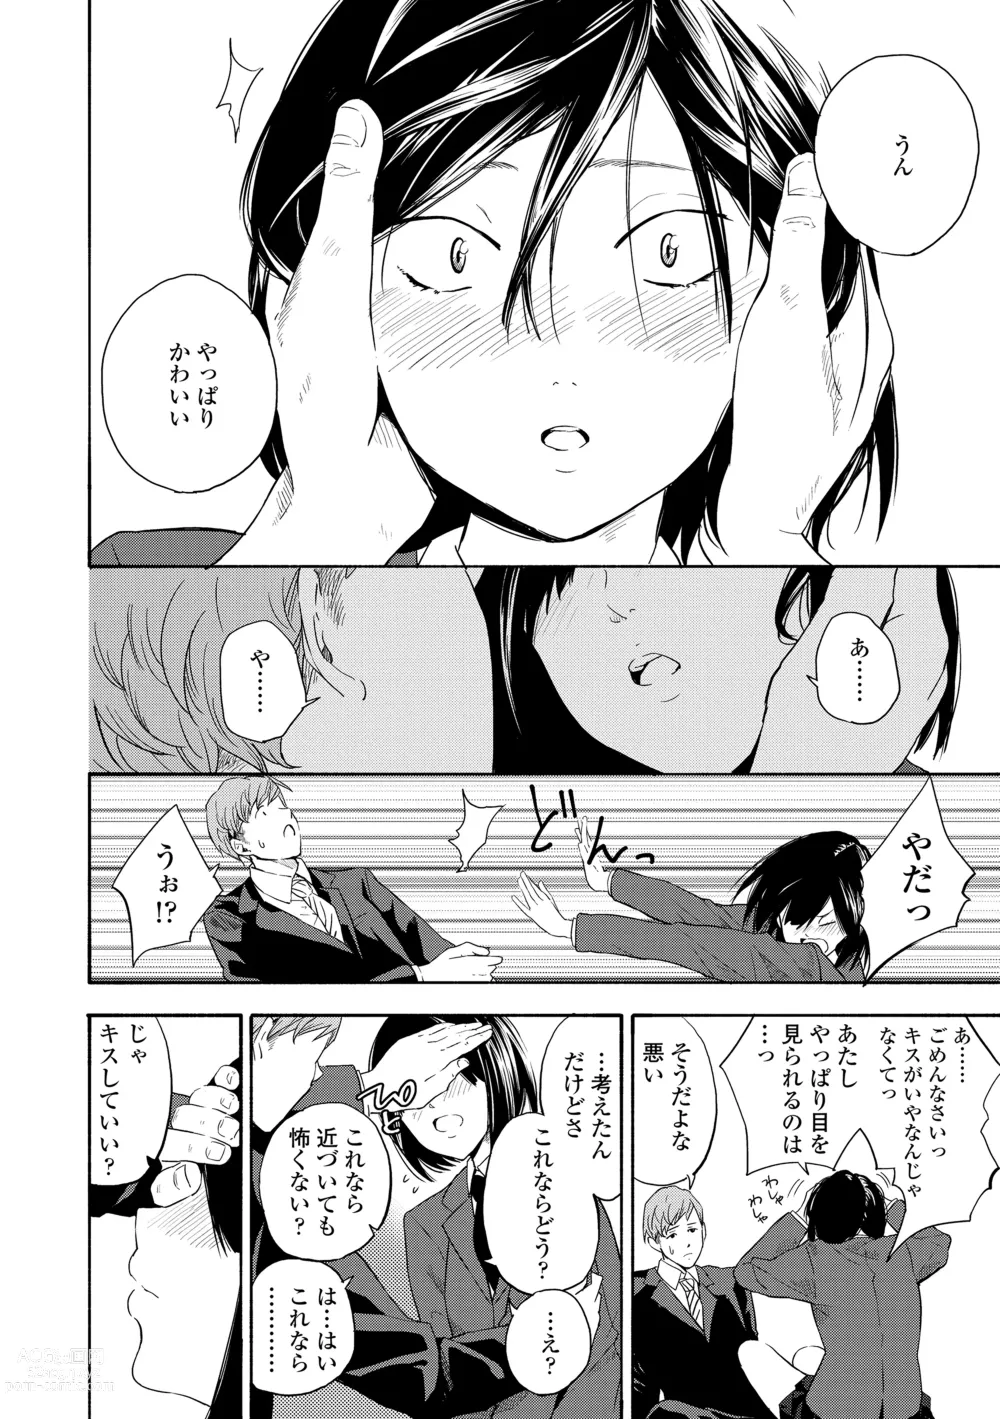 Page 8 of manga Shishunki no Eros - puberty eros + DLsite Kounyu Tokuten